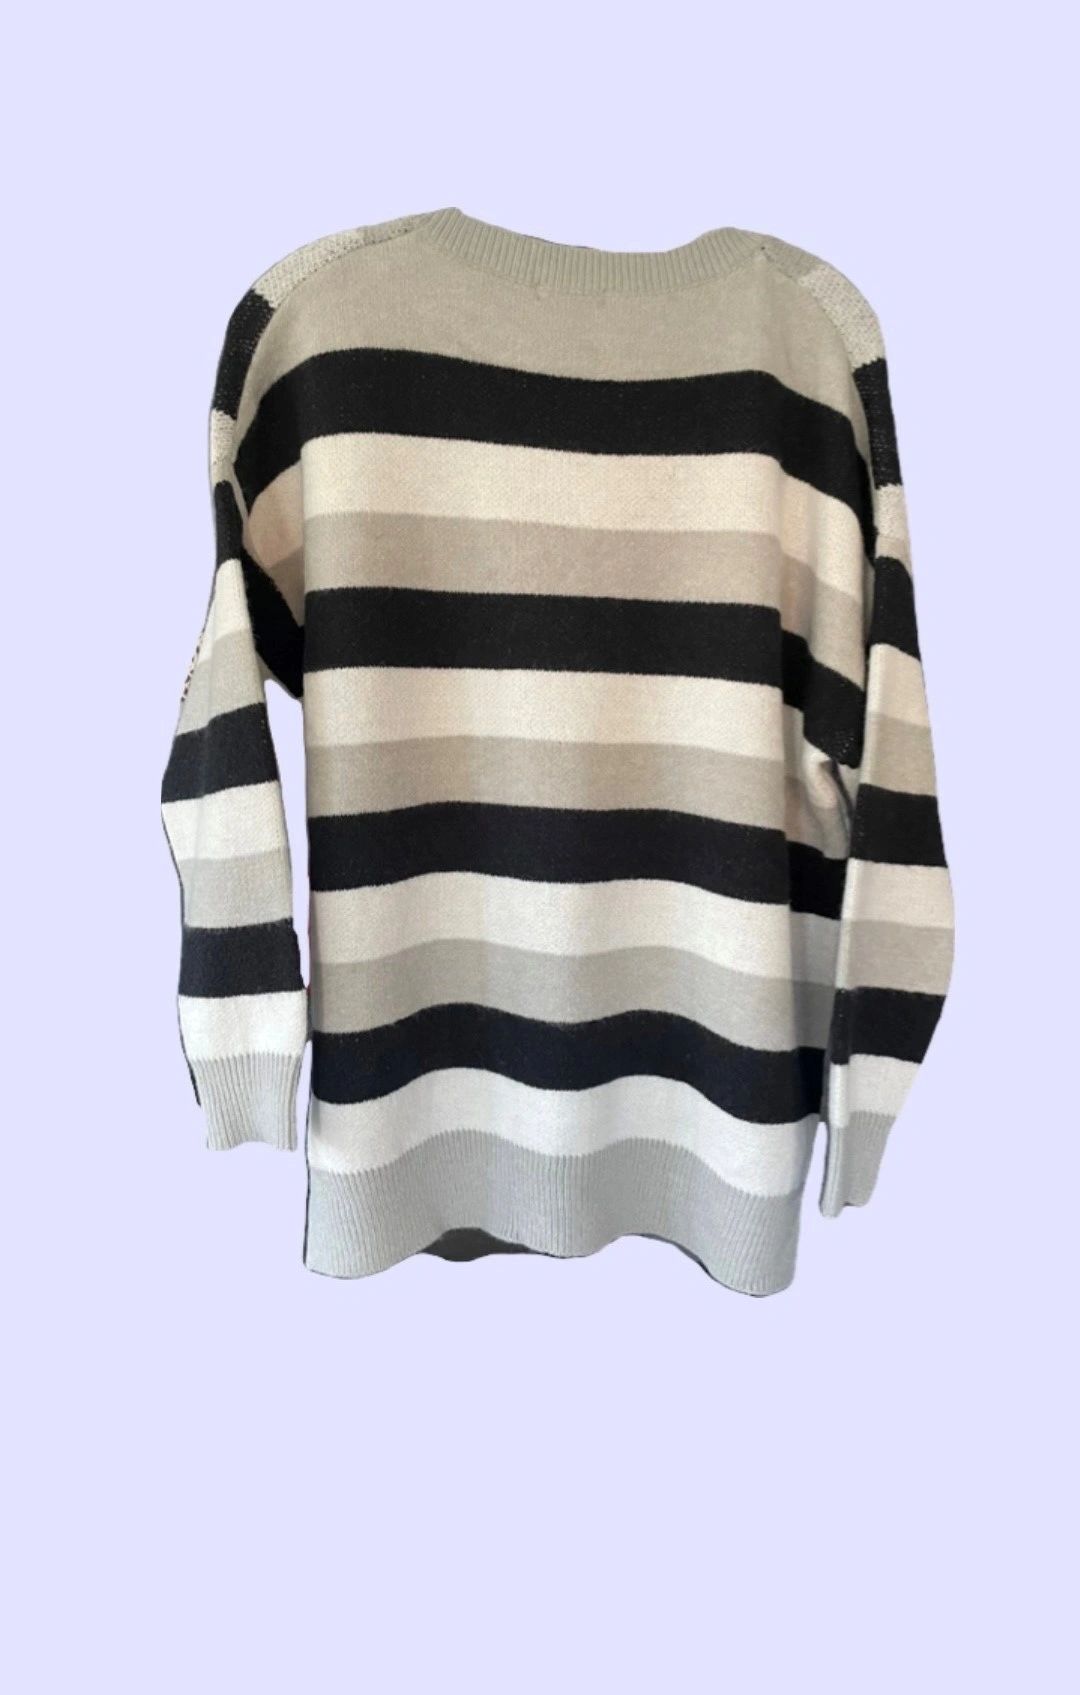 Chevron Sweater - Black, White and Grey